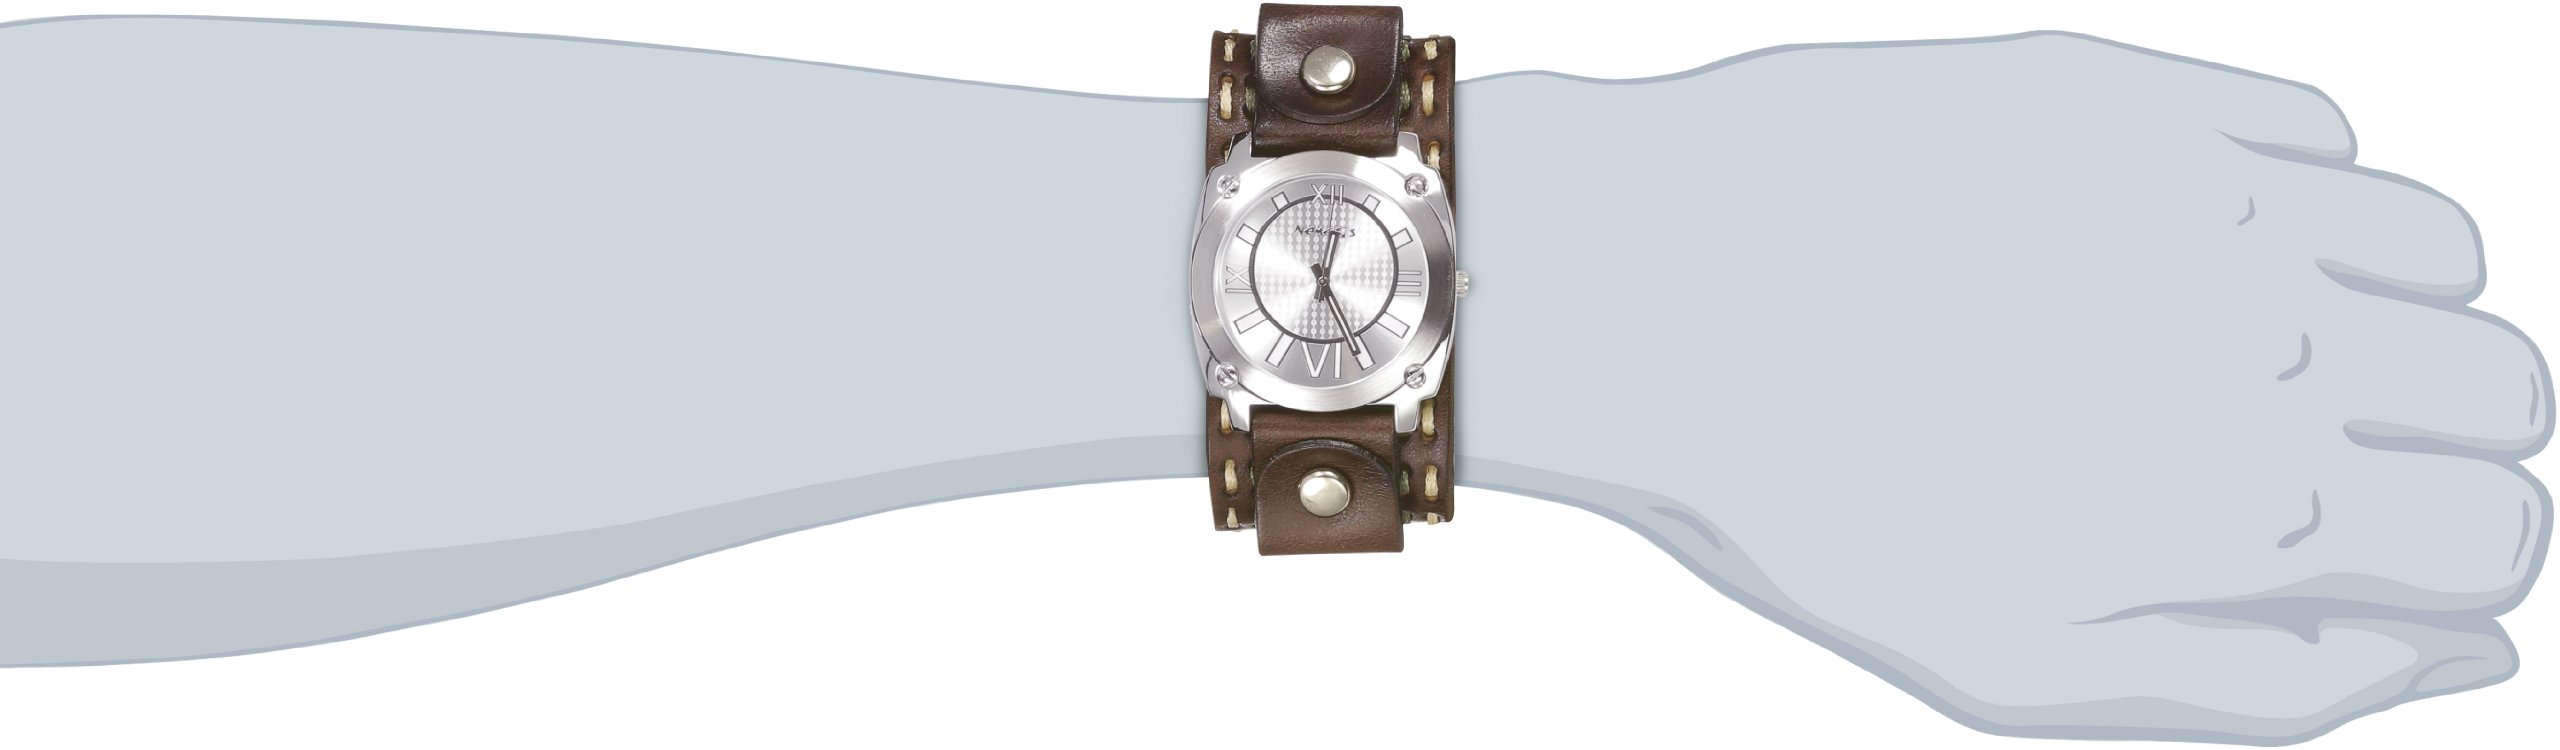 Nemesis Unisex 66SBTD Elegant Roman Numerals Watch